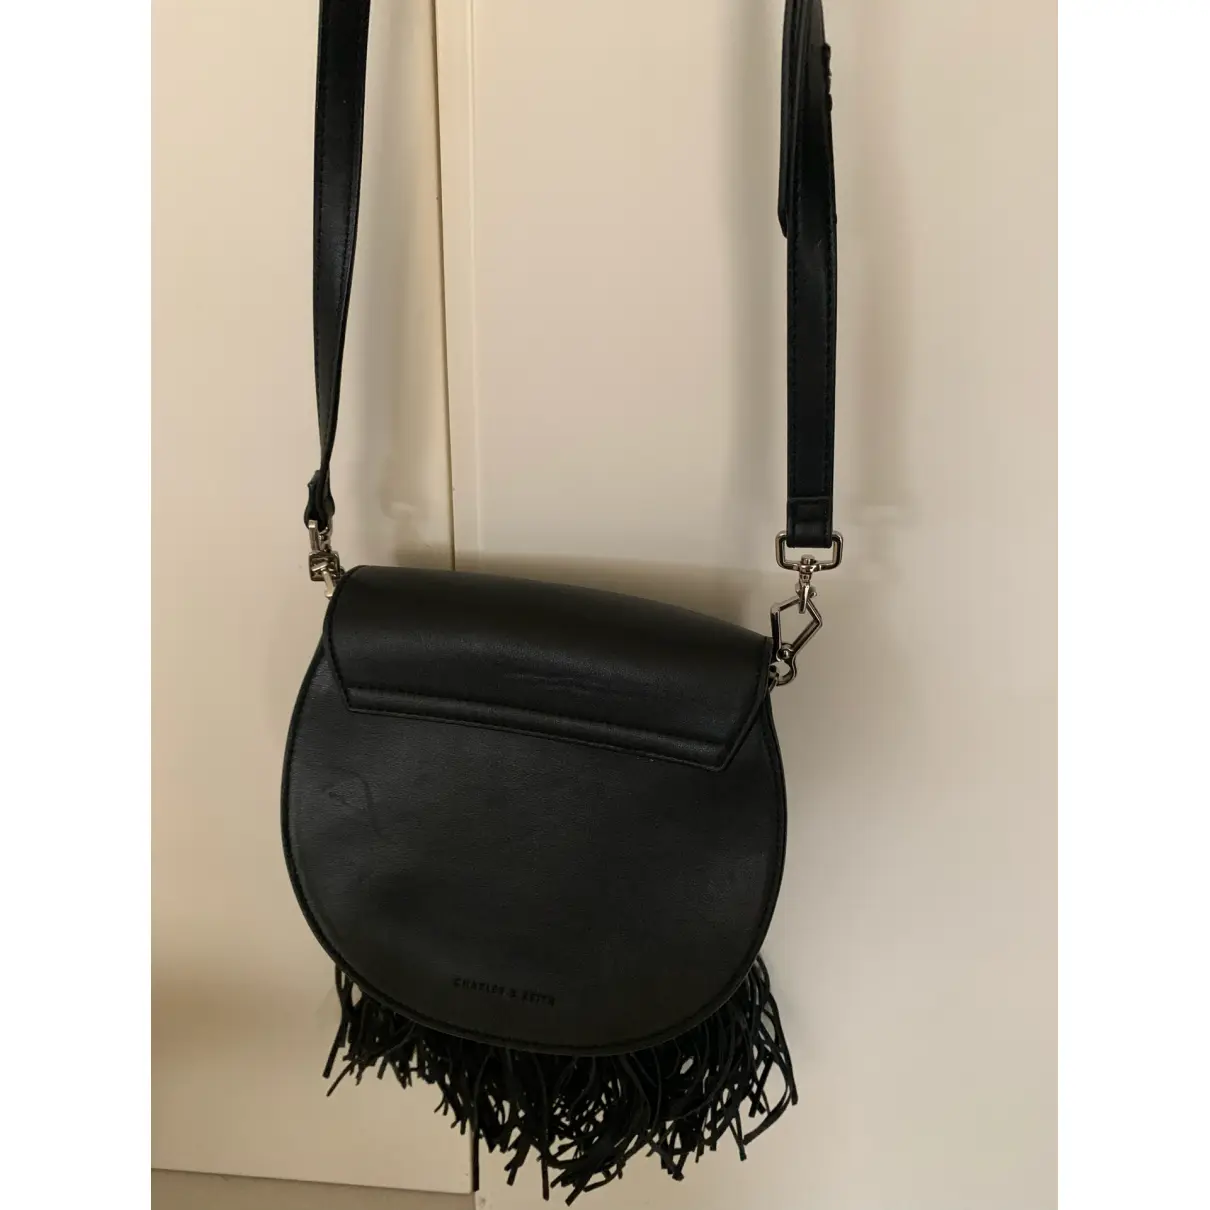 Buy CHARLES & KEITH Leather handbag online